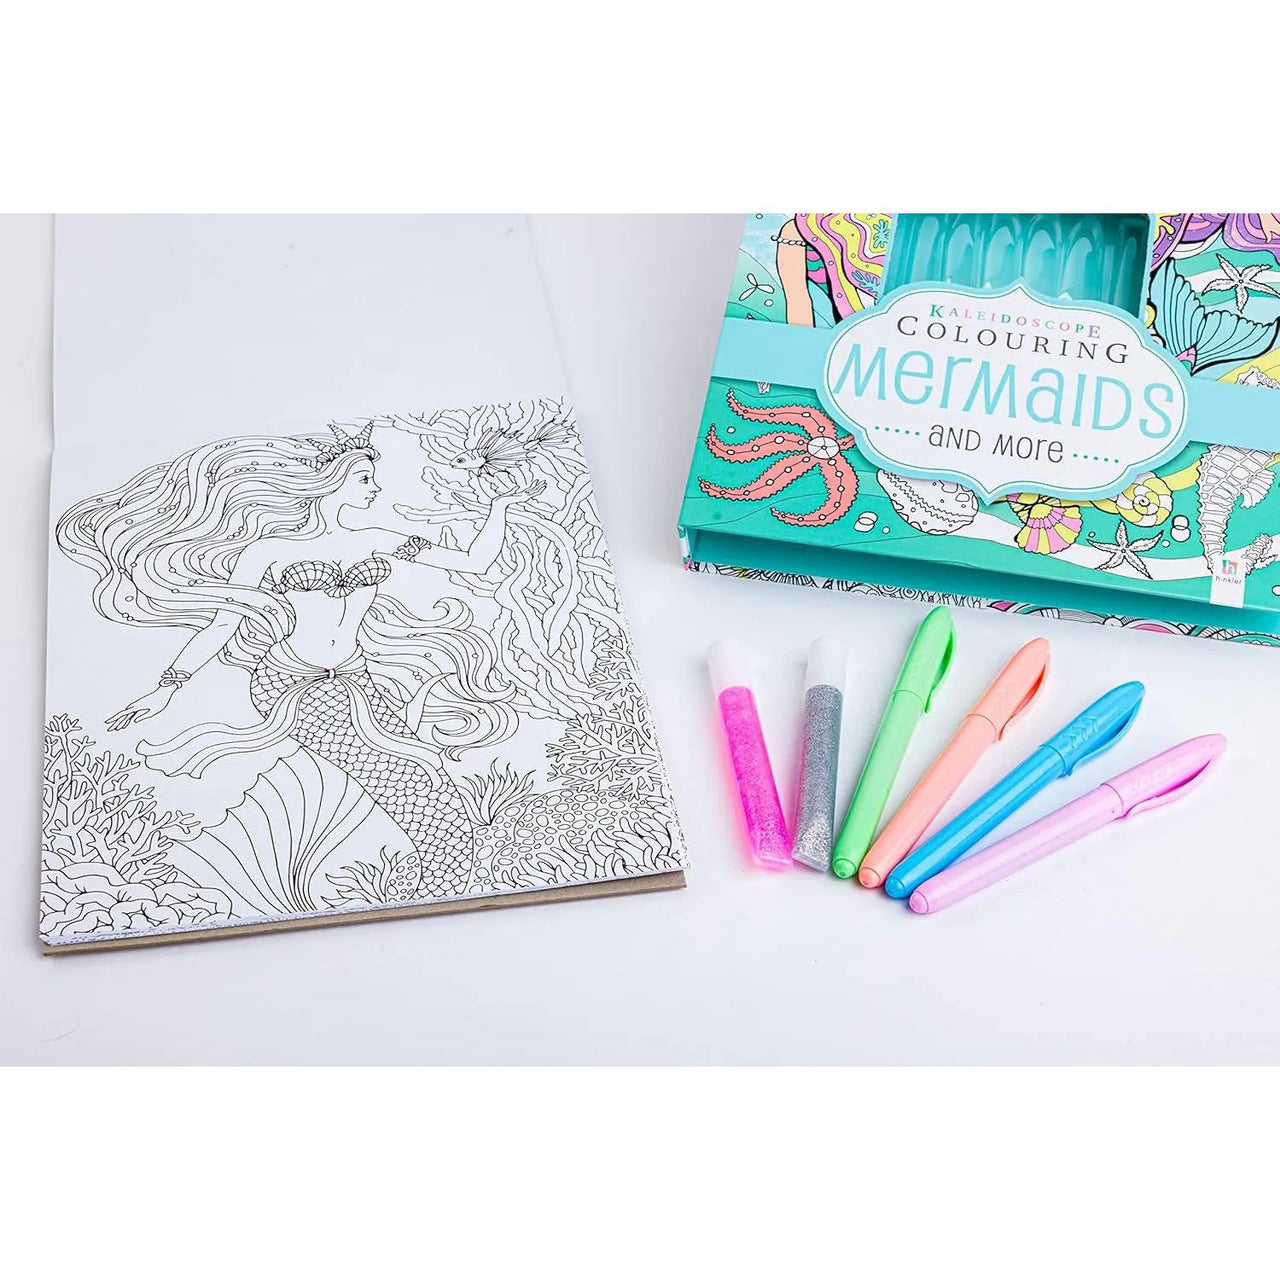 Kaleidoscope Colouring Kit: Mermaids and More Unicorn & Punkboi